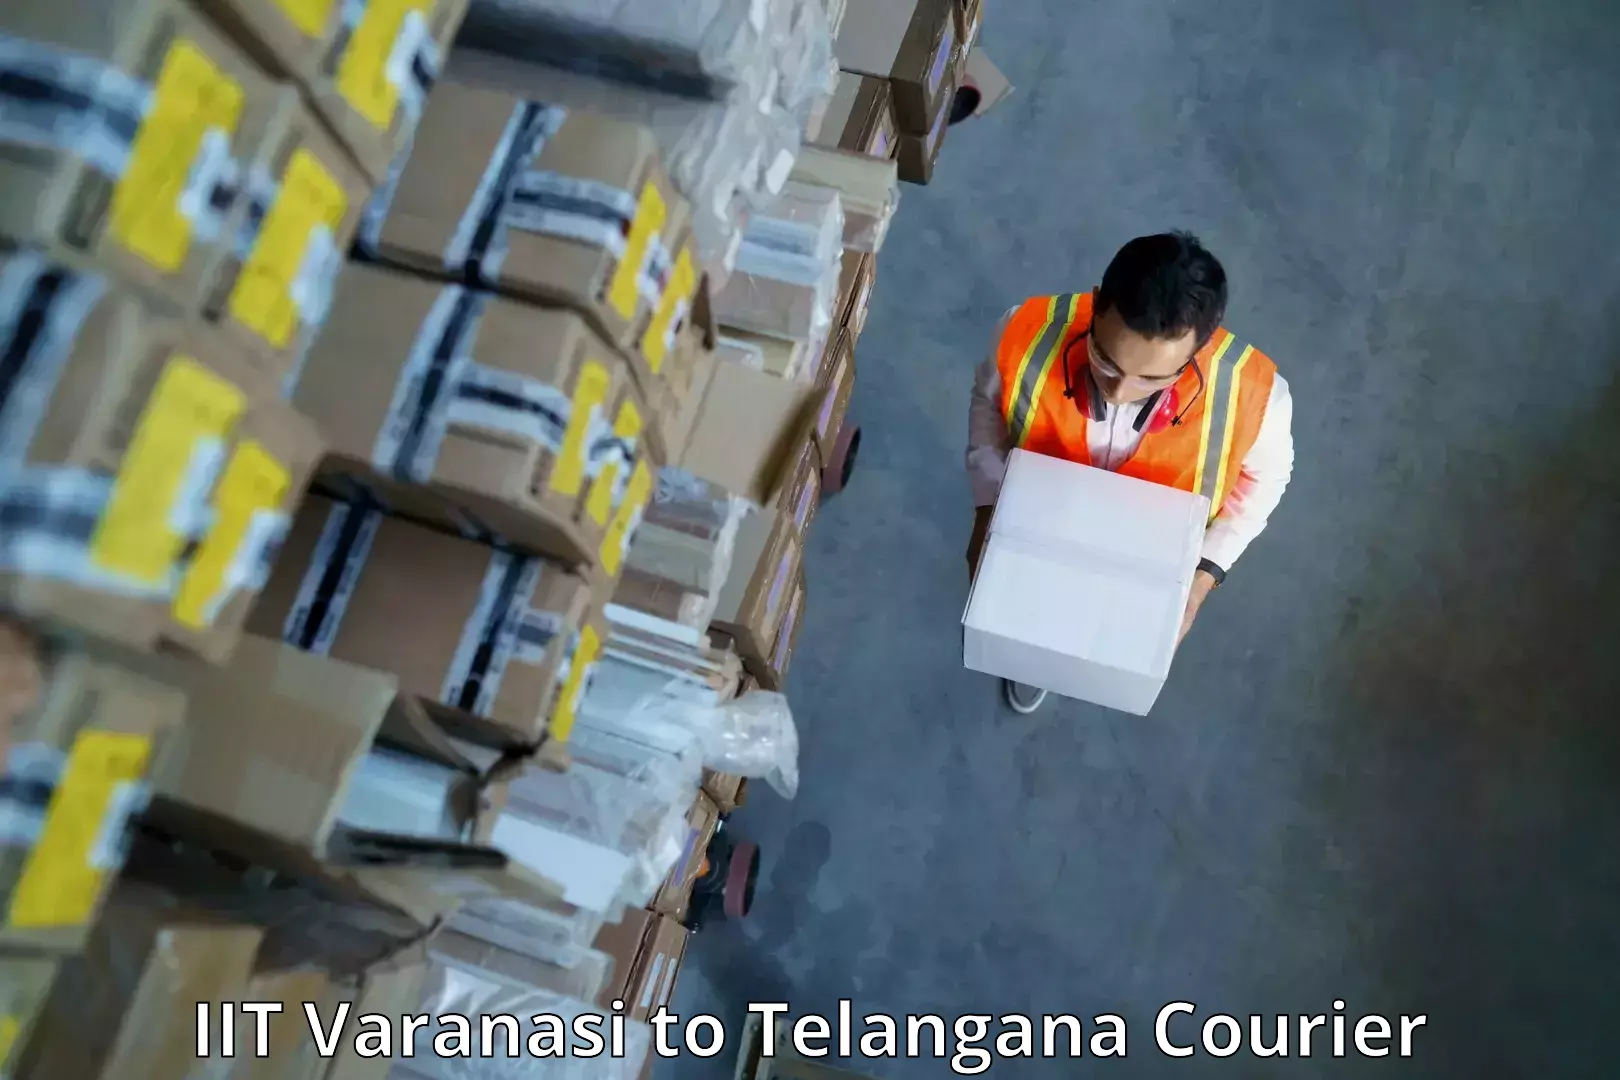 Express delivery network IIT Varanasi to Kodimial